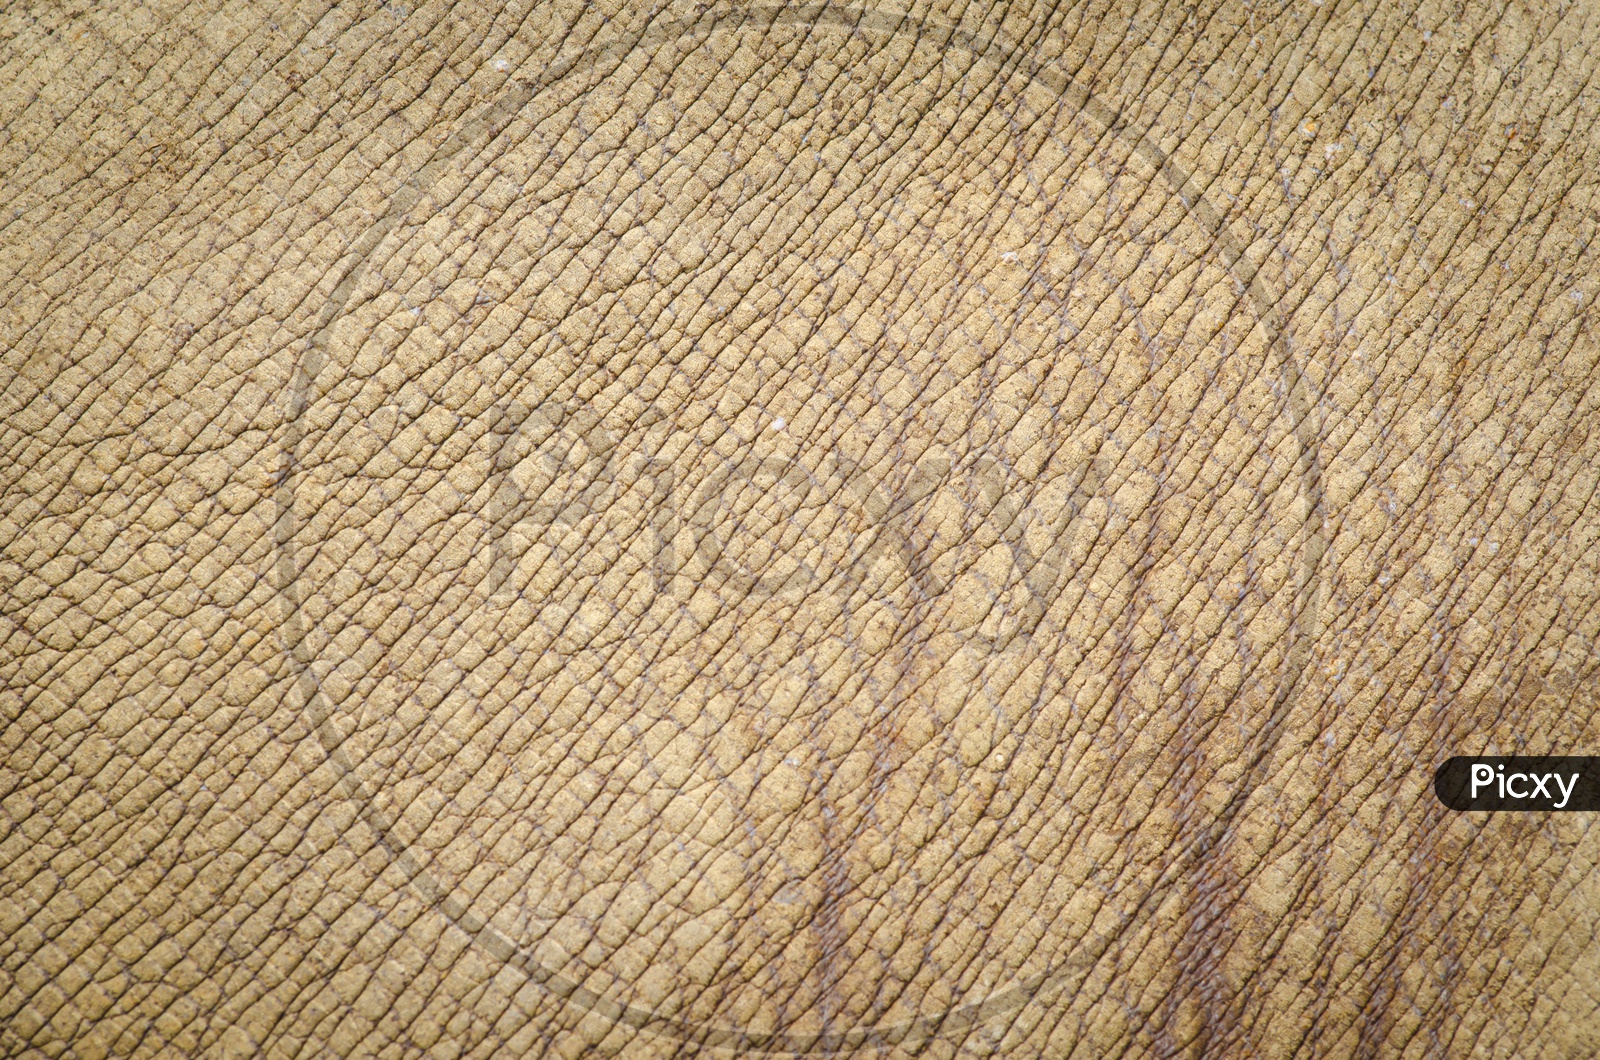 Rhinoceros or Rhino Skin Textured Background